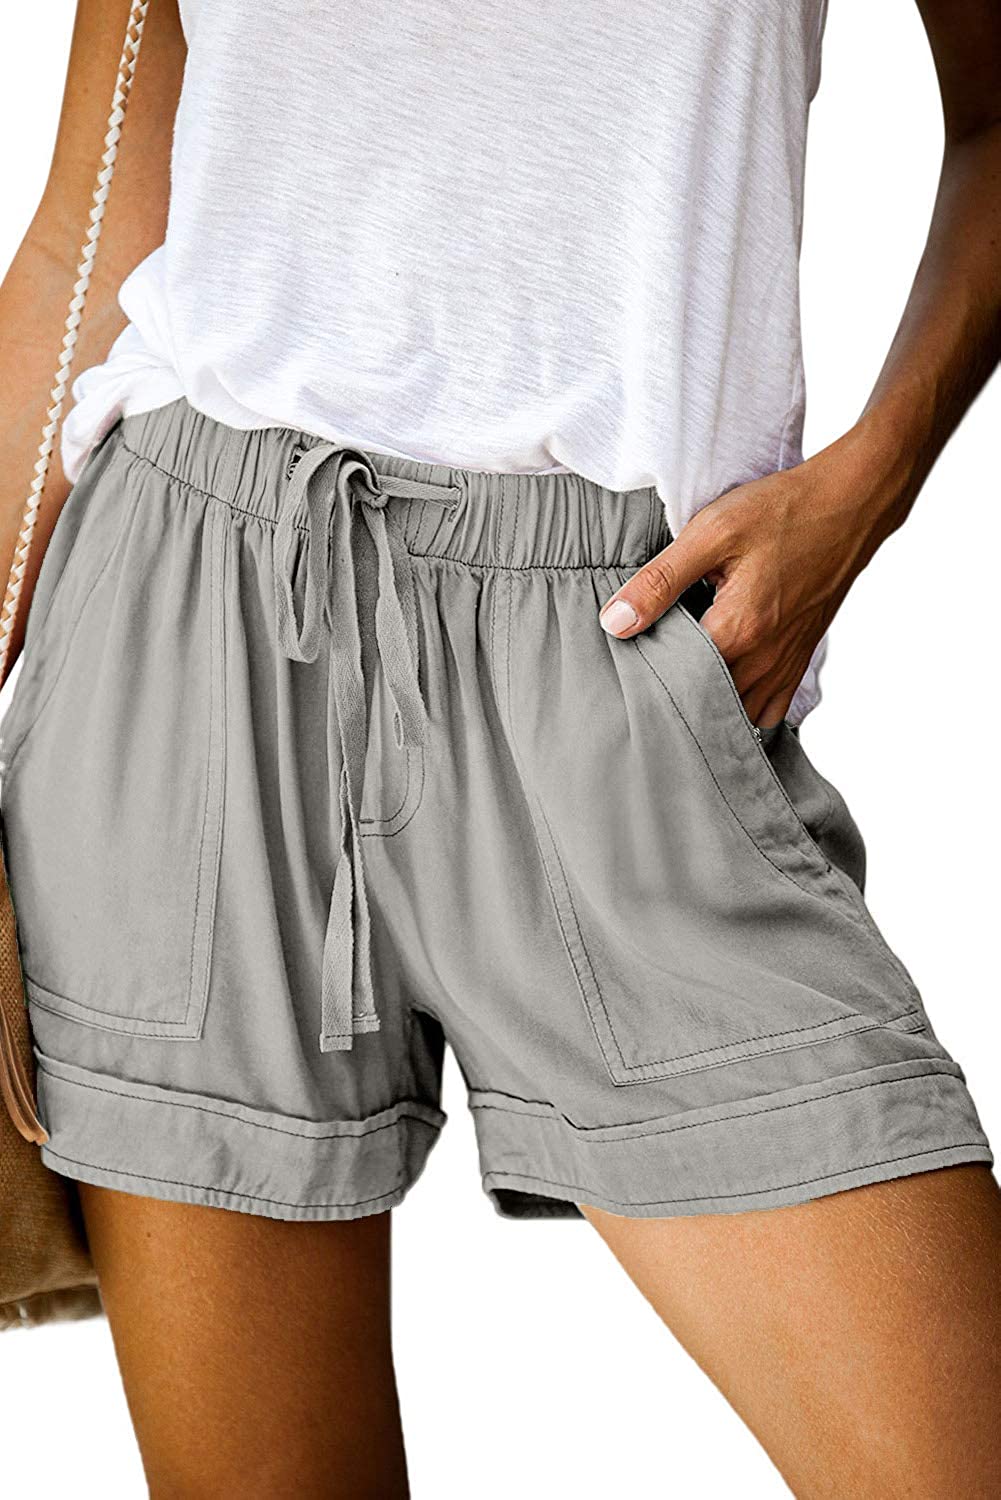 CILKOO Womens Comfy Drawstring Casual Elastic Waist Pocketed Shorts S-XXL